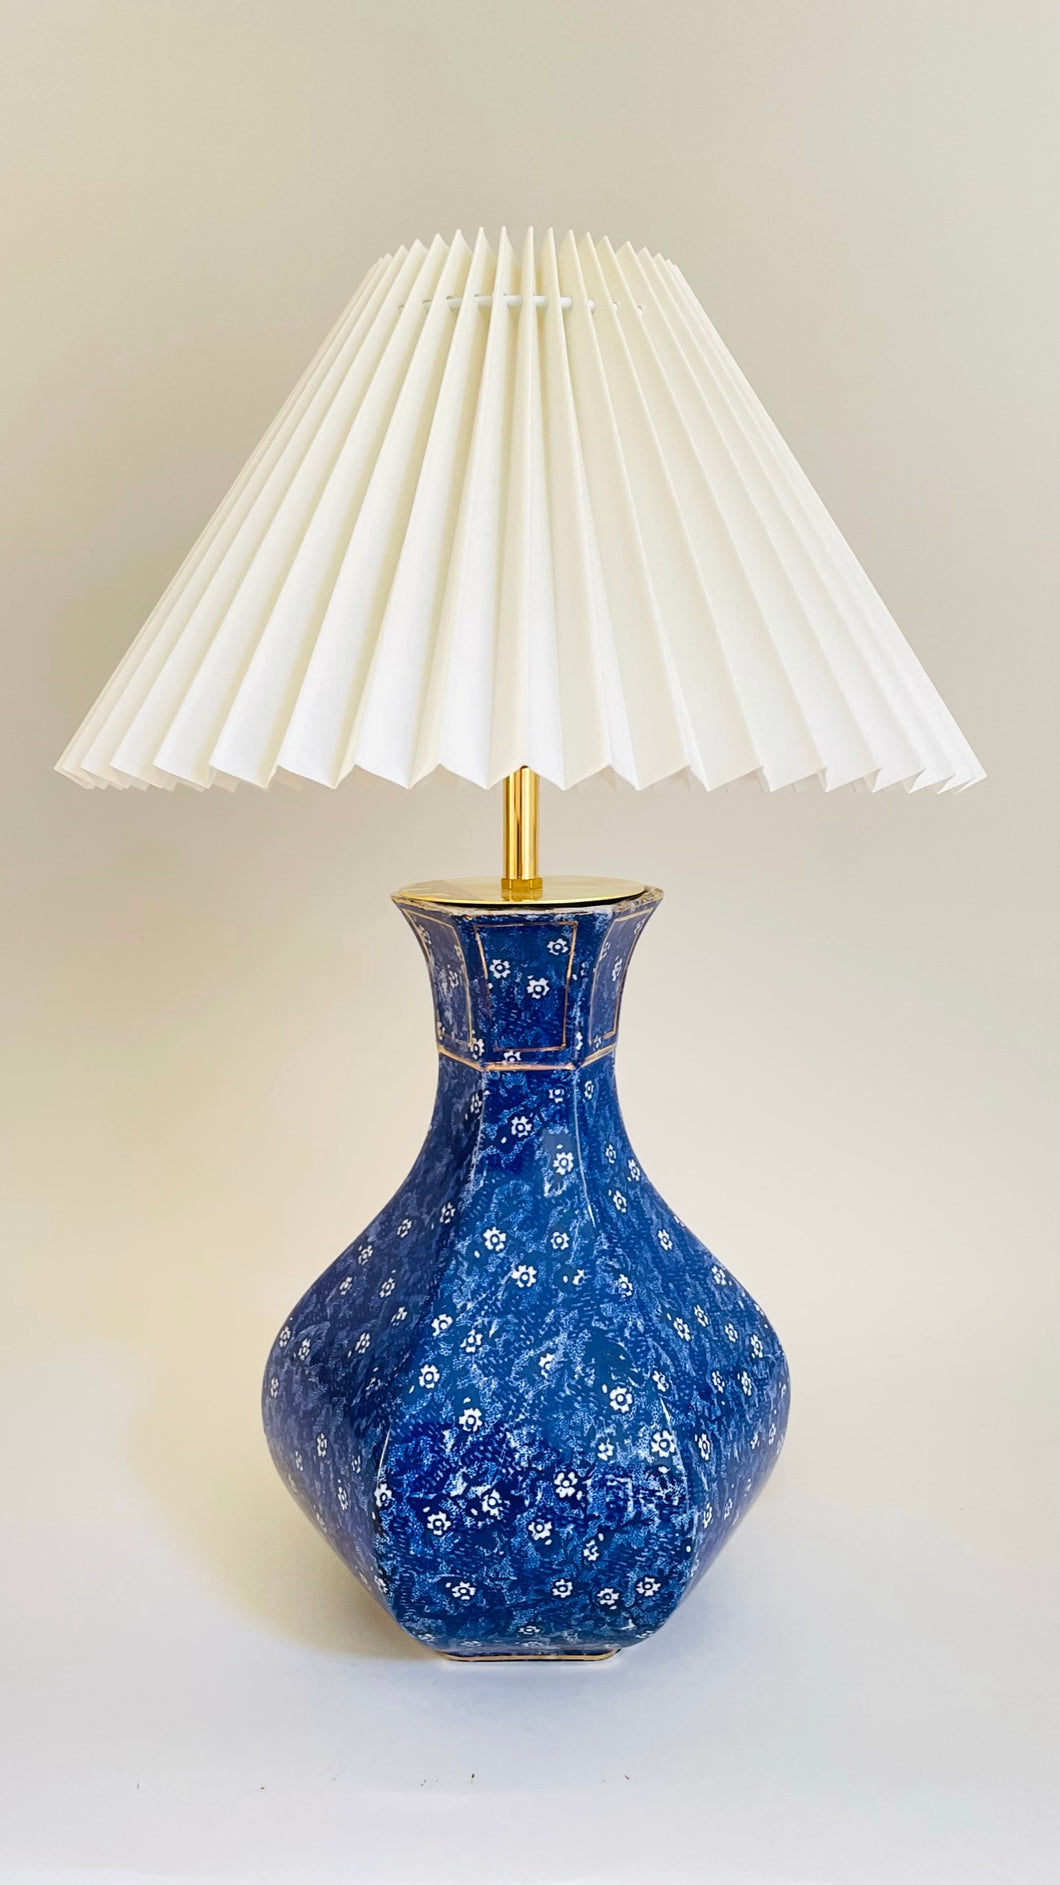 Antique Porcelain Lamp - pre order for w/c Sept 5th